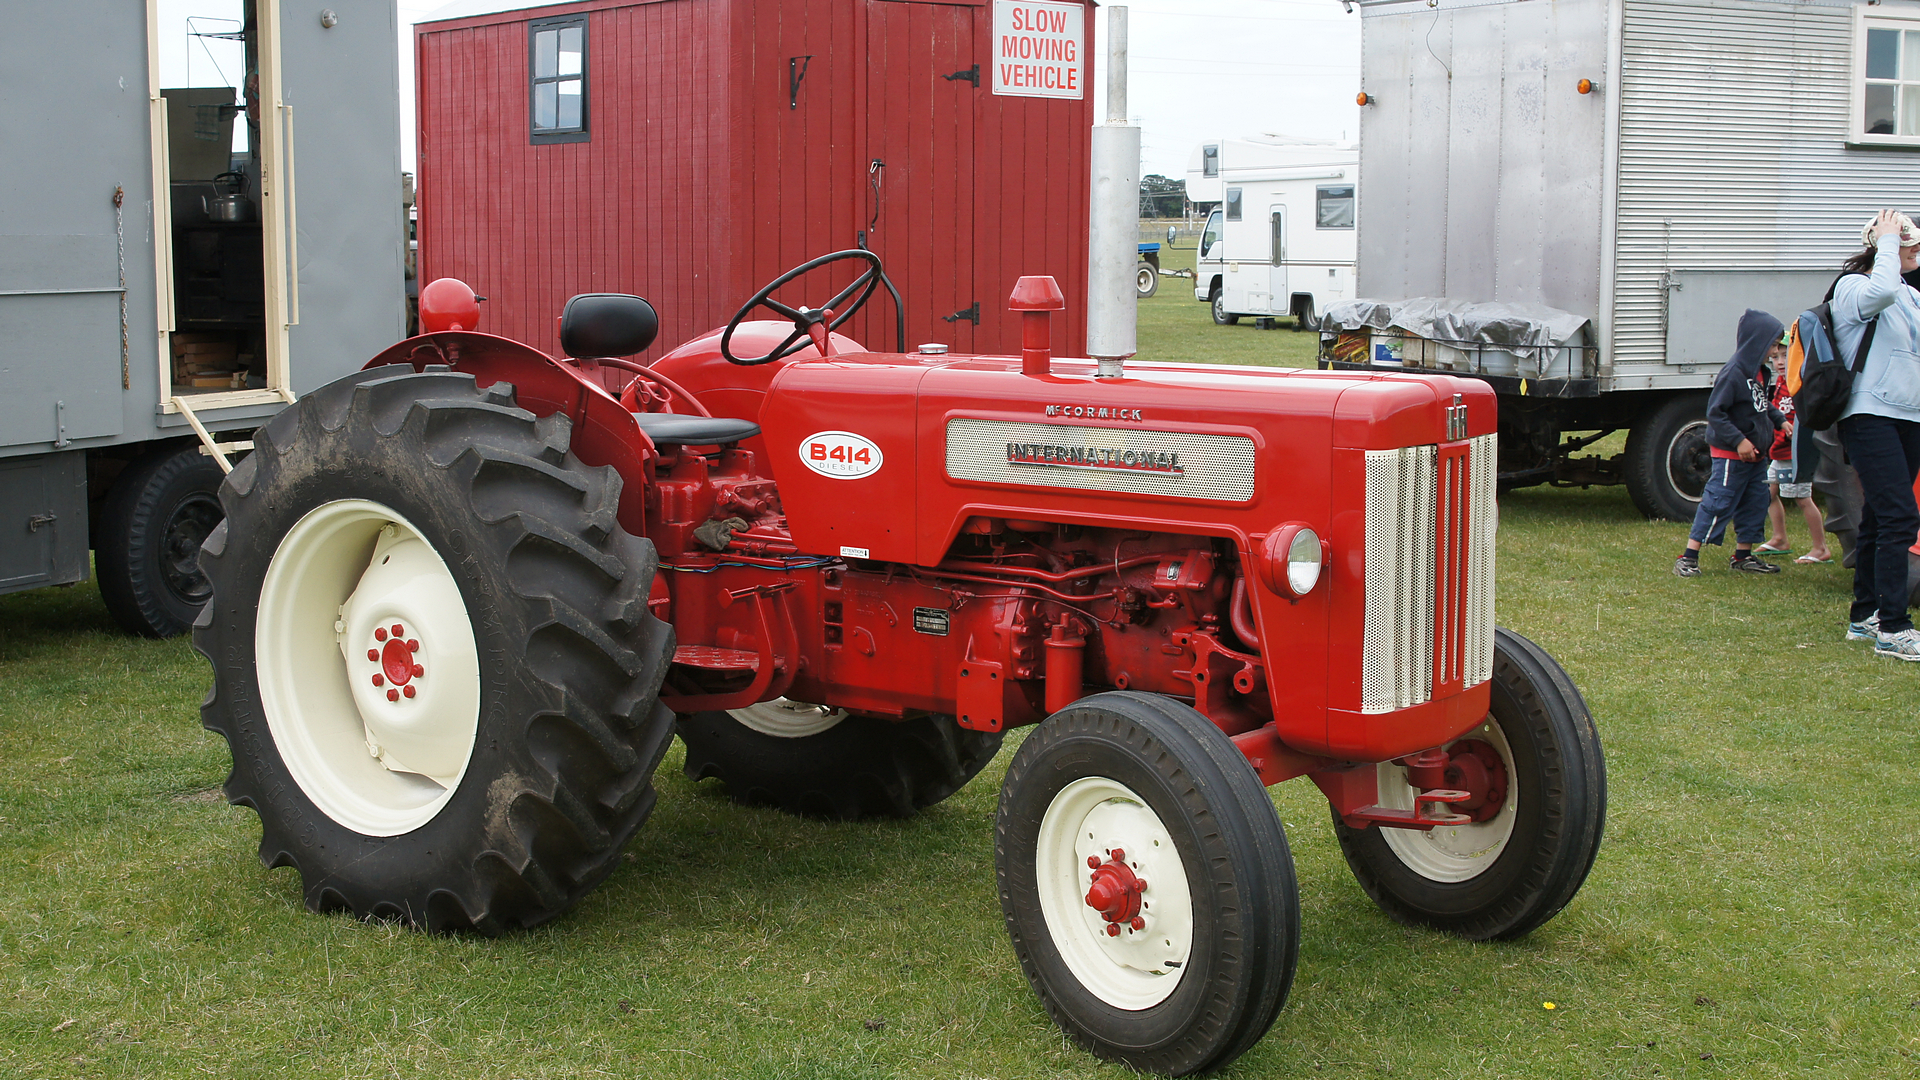 1962 McCormick International B-414 Tractor. | Flickr - Photo Sharing!